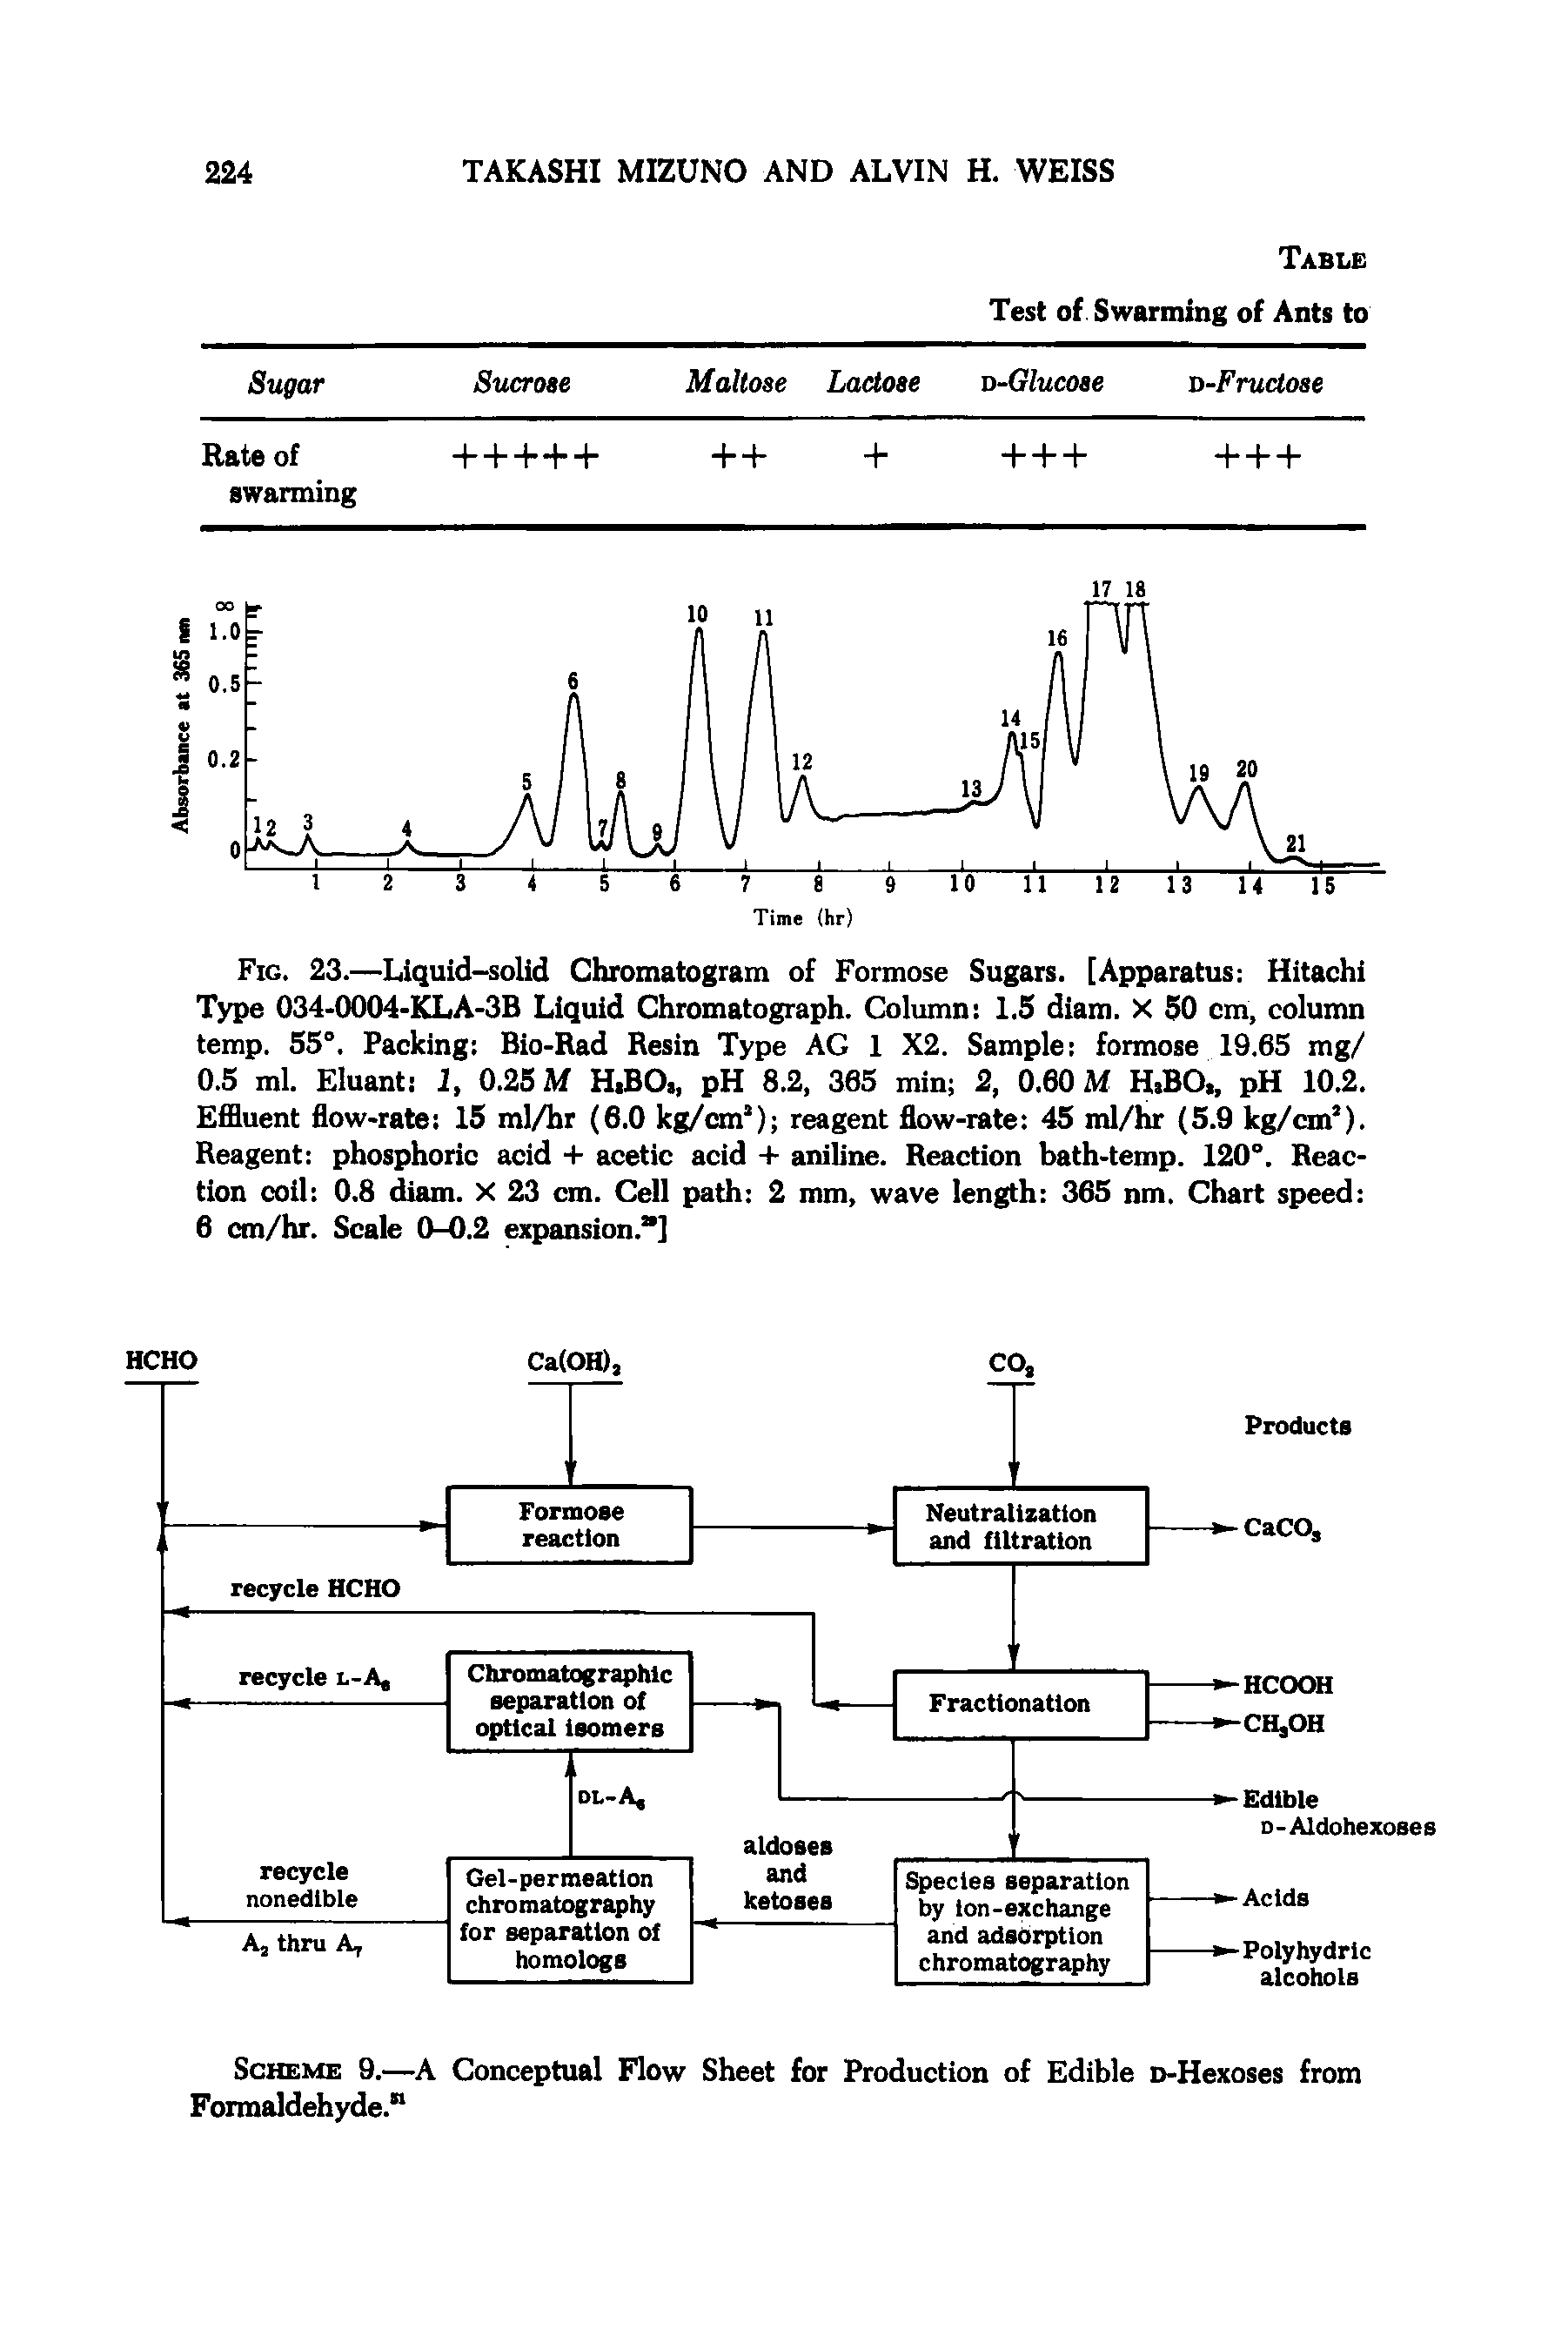 Fig. 23.—Liquid-solid Chromatogram of Formose Sugars. [Apparatus Hitachi Type 034-0004-KLA-3B Liquid Chromatograph. Column 1.5 diam. X 50 cm, column temp. 55°. Packing Bio-Rad Resin Type AG 1 X2. Sample formose 19.65 mg/ 0.5 ml. Eluant 1, 0.25 M H.BO, pH 8.2, 385 min 2, 0.60 M H.BO., pH 10.2. Effluent flow-rate 15 ml/hr (6.0 kg/cm ) reagent flow-rate 45 ml/hr (5.9 kg/cm ). Reagent phosphoric acid + acetic acid + aniline. Reaction bath-temp. 120°. Reaction coil 0.8 diam. X 23 cm. Cell path 2 mm, wave length 365 nm. Chart speed 6 cm/hr. Scale 0-0.2 expansion. ]...